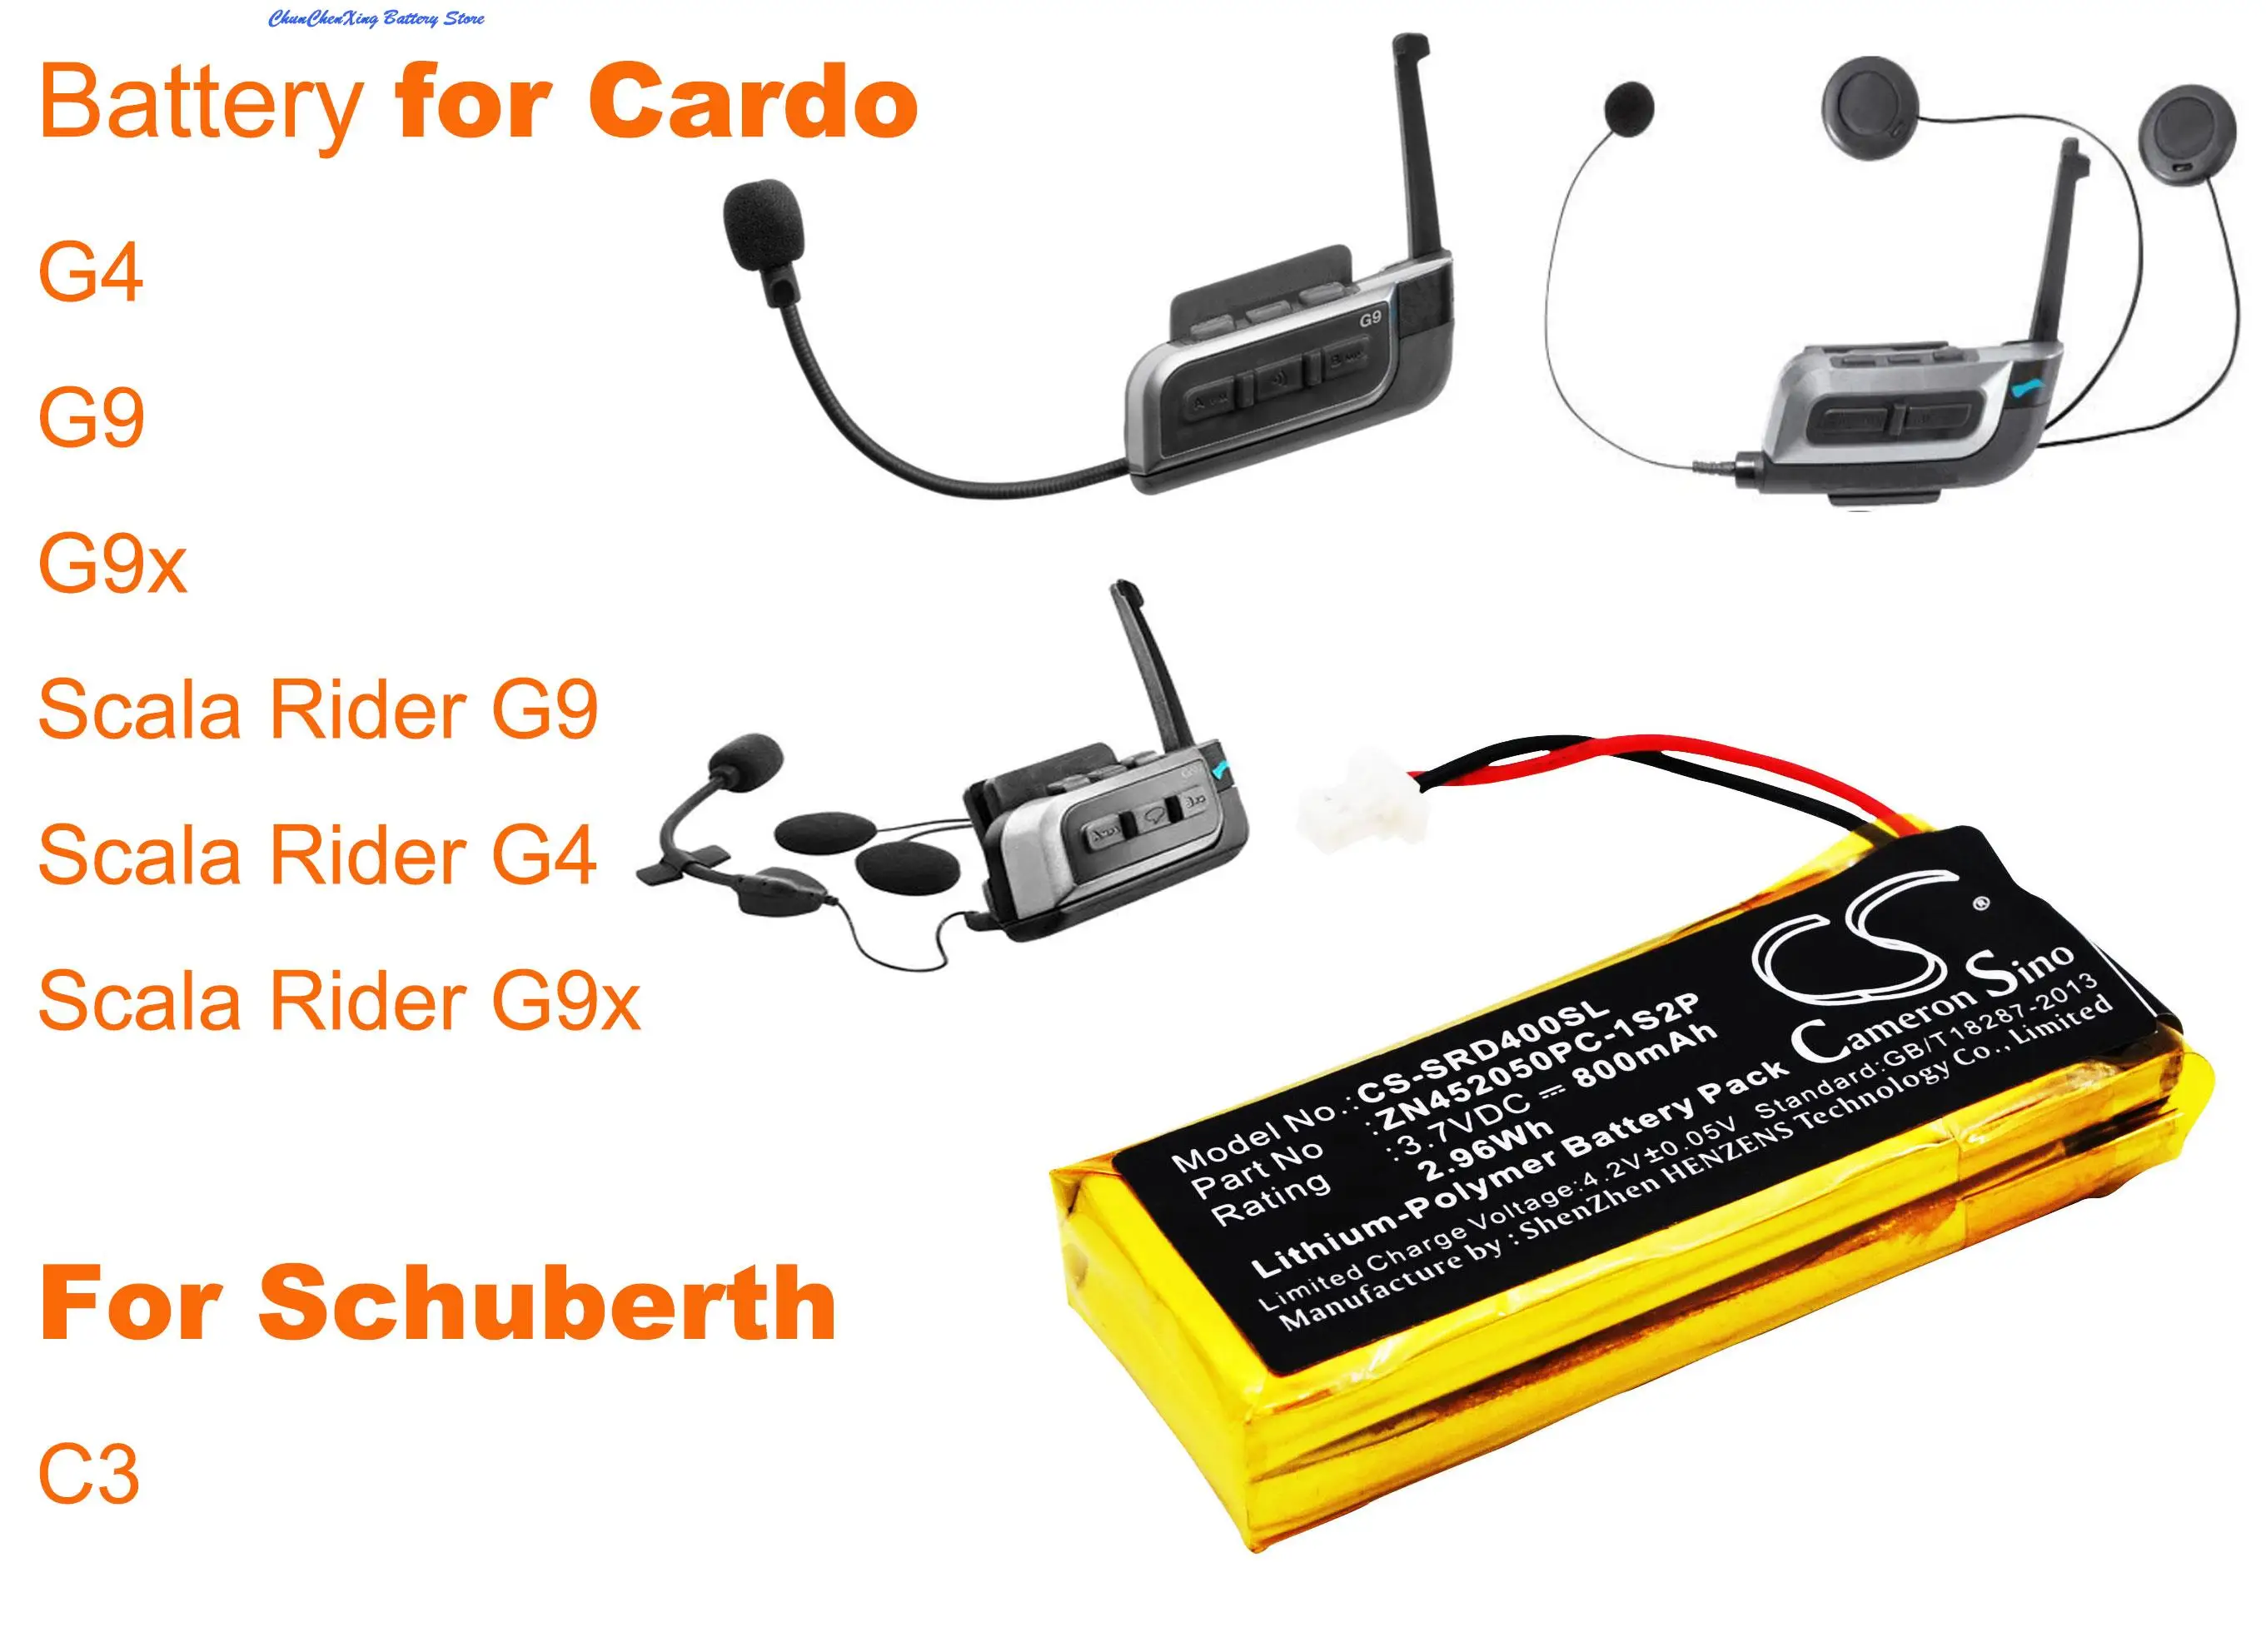 

Cameron Sino 800mAh Battery BAT00002,BAT00004, WW452050-2P, ZN452050PC-1S2P for Cardo Scala Rider G4, G9, G9x, For Schuberth C3